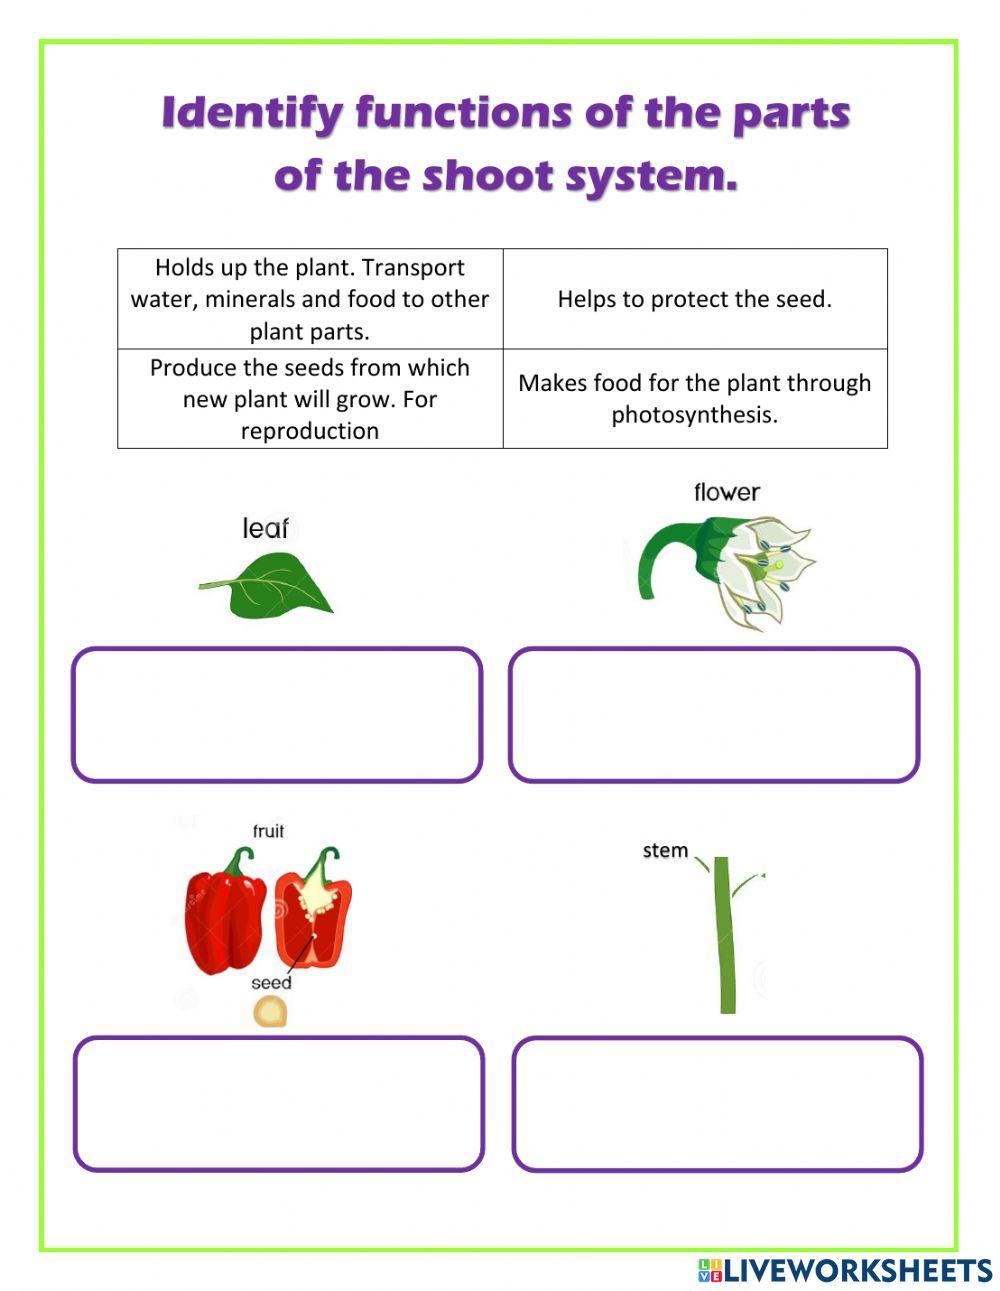 Shoot system